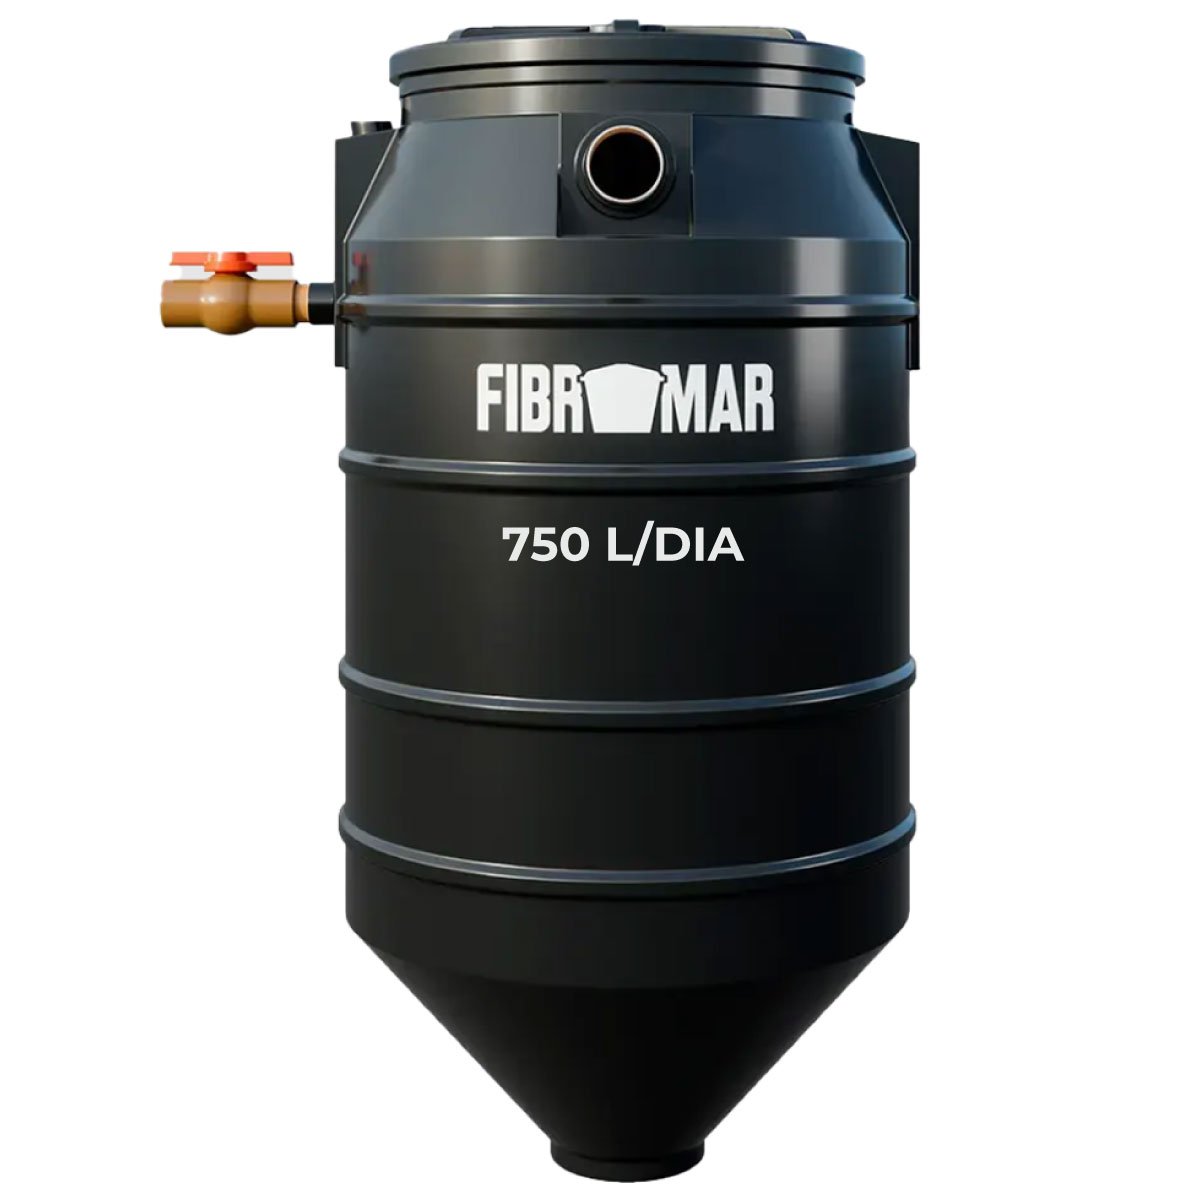 Fossa Séptica Biodigestor 750 Litros/dia - Fibromar - 1